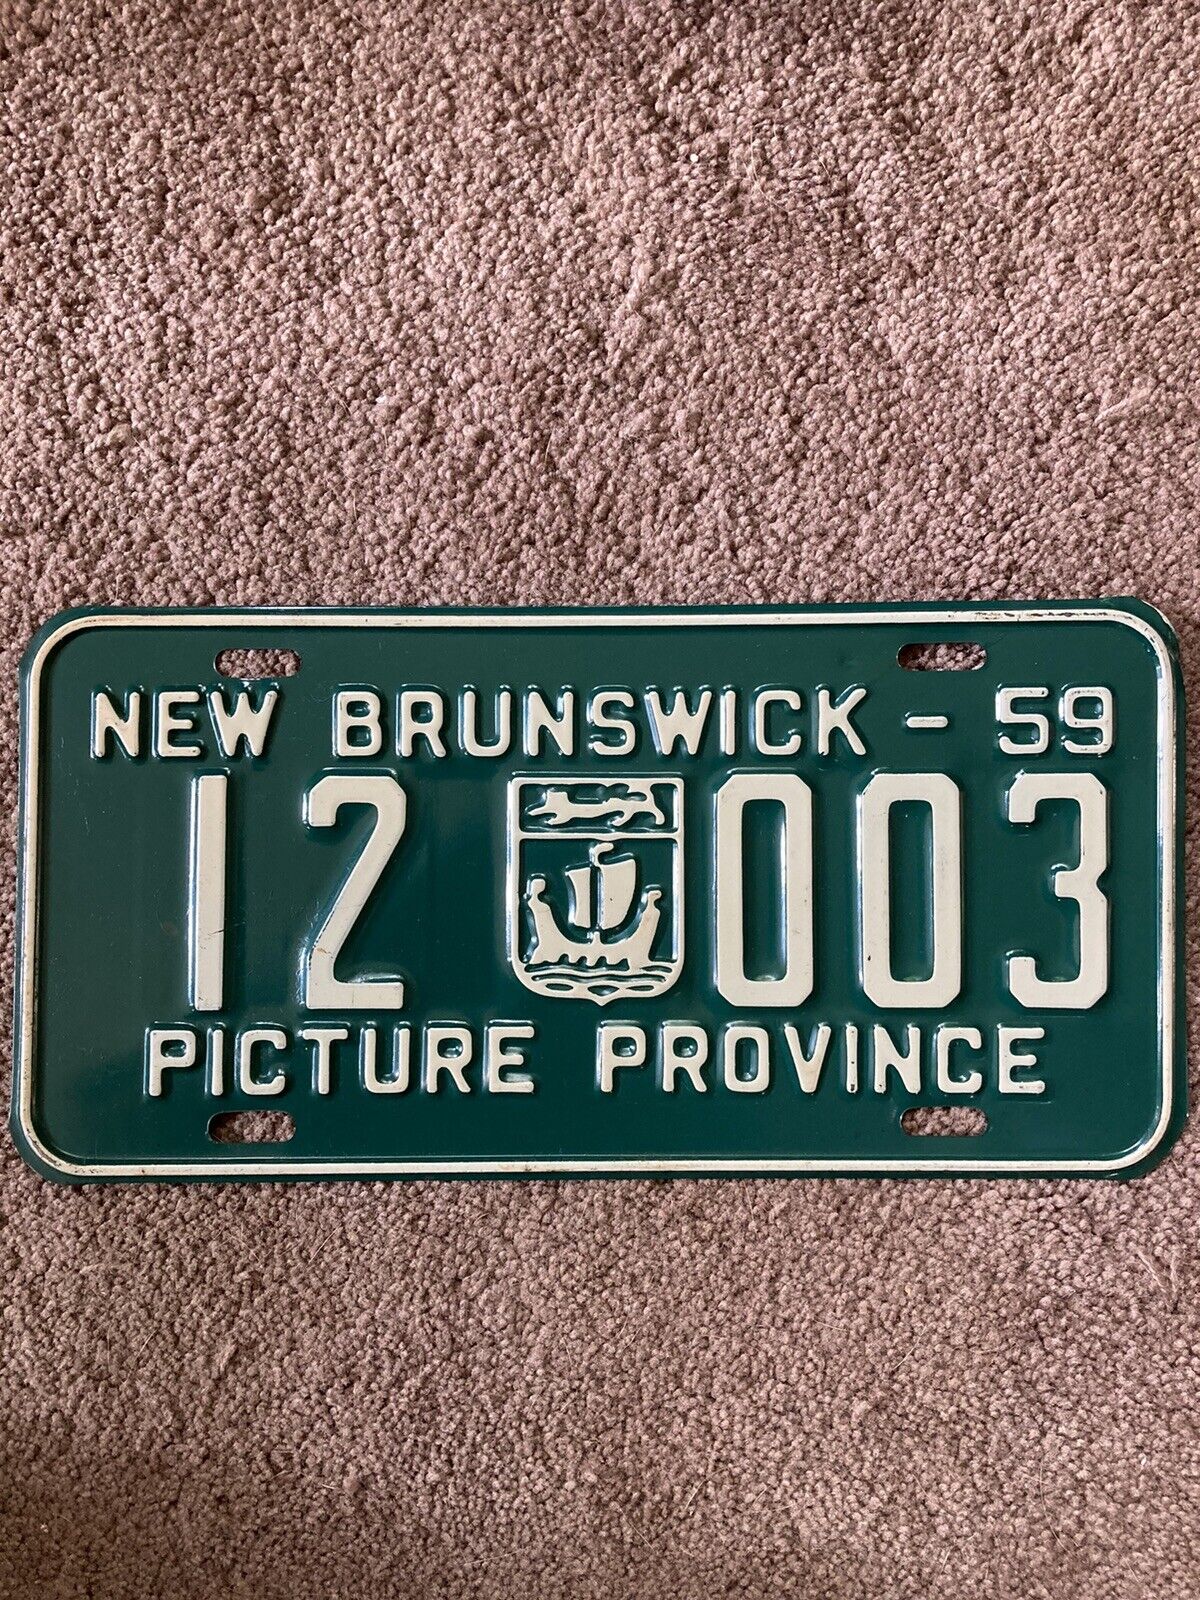 1959 New Brunswick License Plate - 12 003 - Very Nice